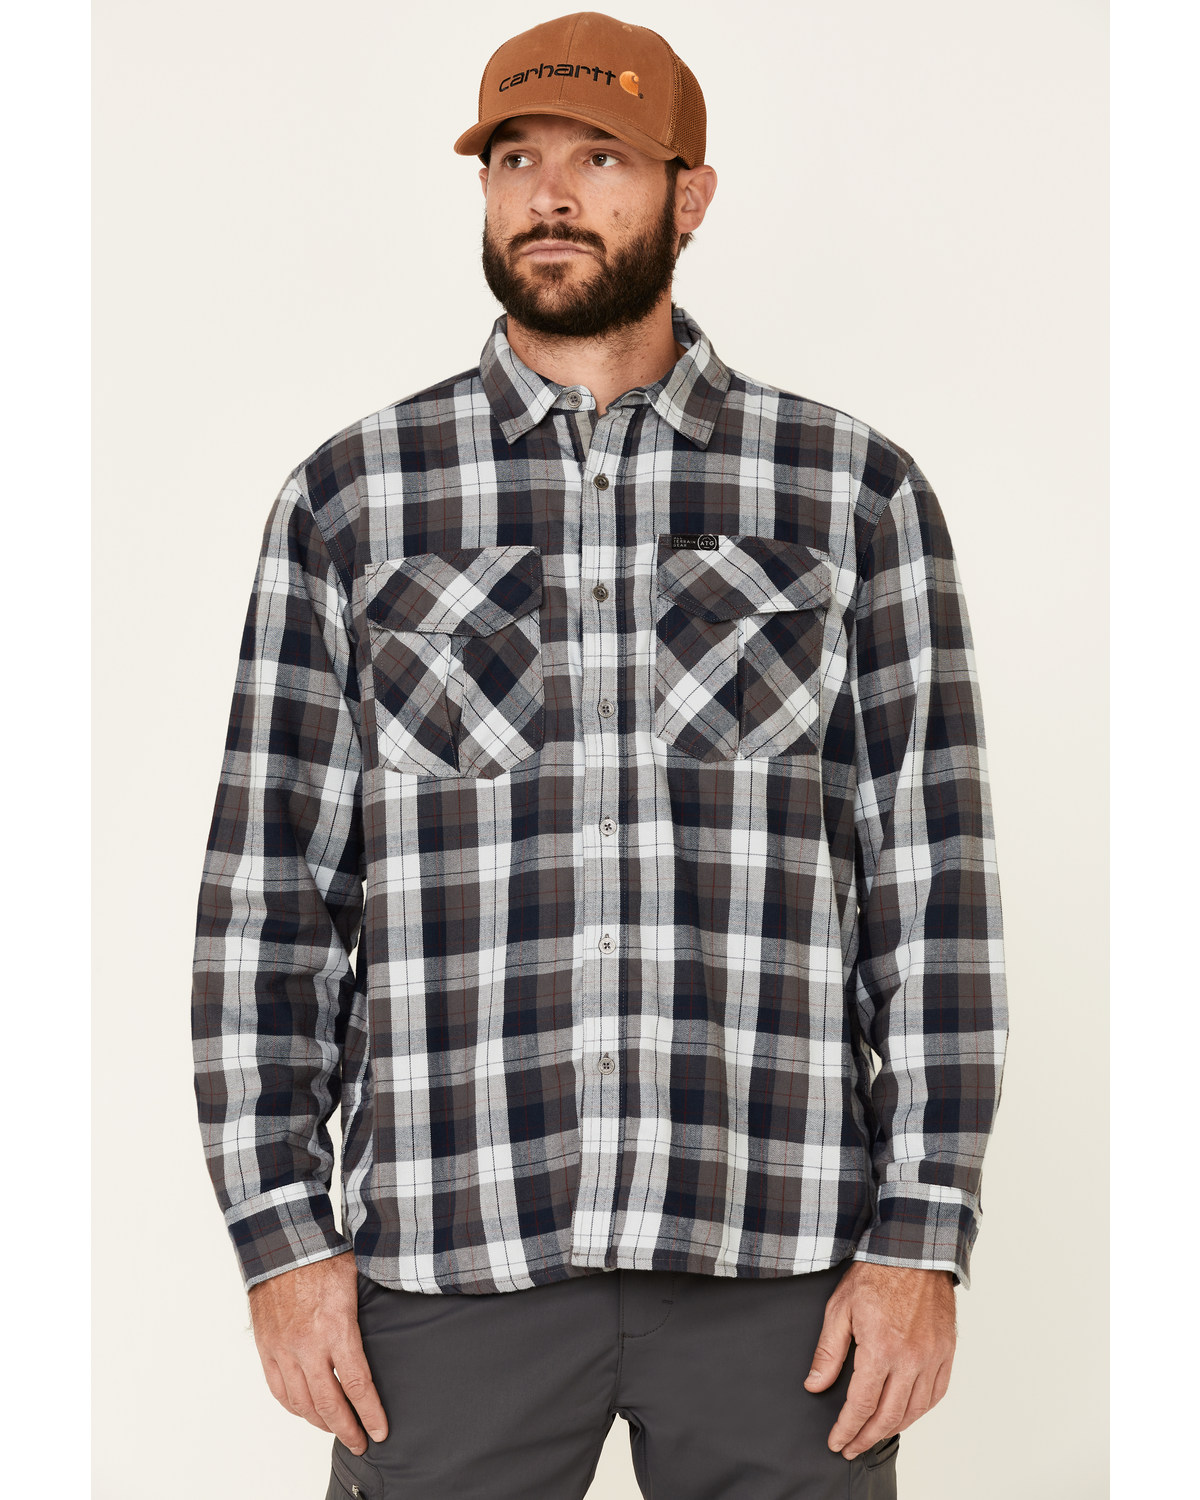 ATG by Wrangler Men's All Terrain Cabernet Plaid Long Sleeve Western Flannel Shirt